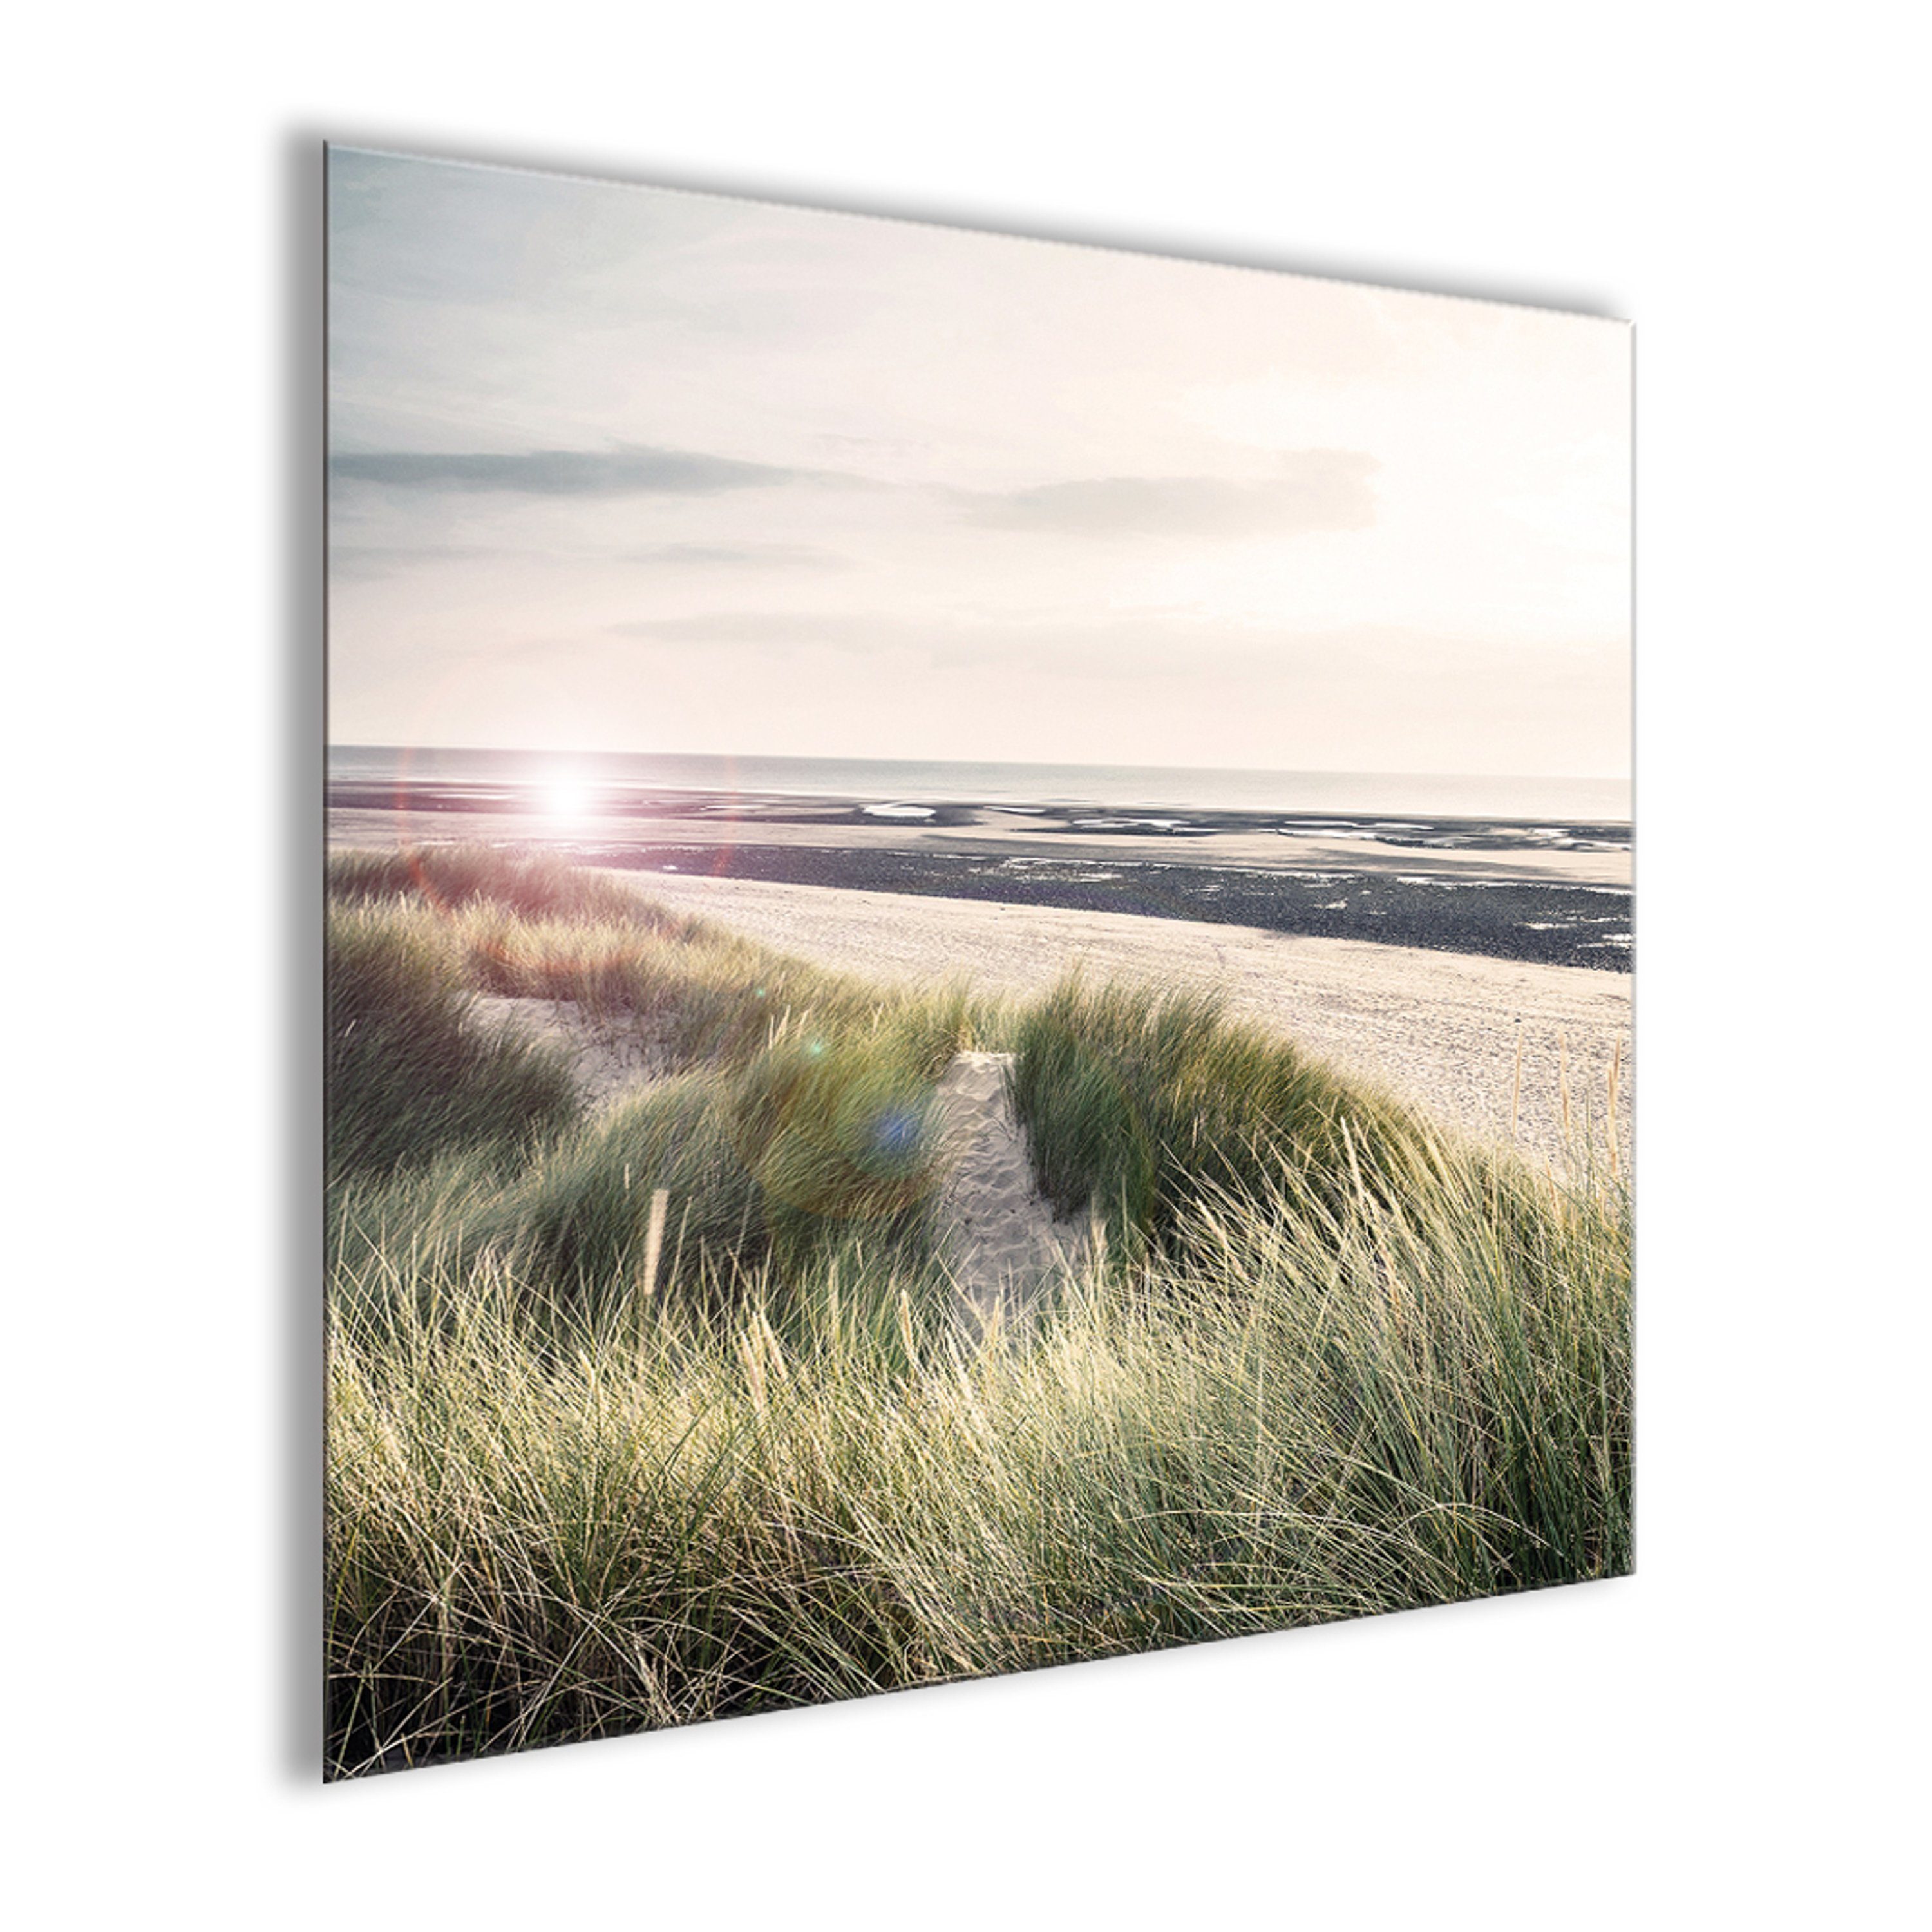 Glas maritim 50x50cm Glasbild Düne Meer aus Strand Bild Landschaft artissimo Glasbild